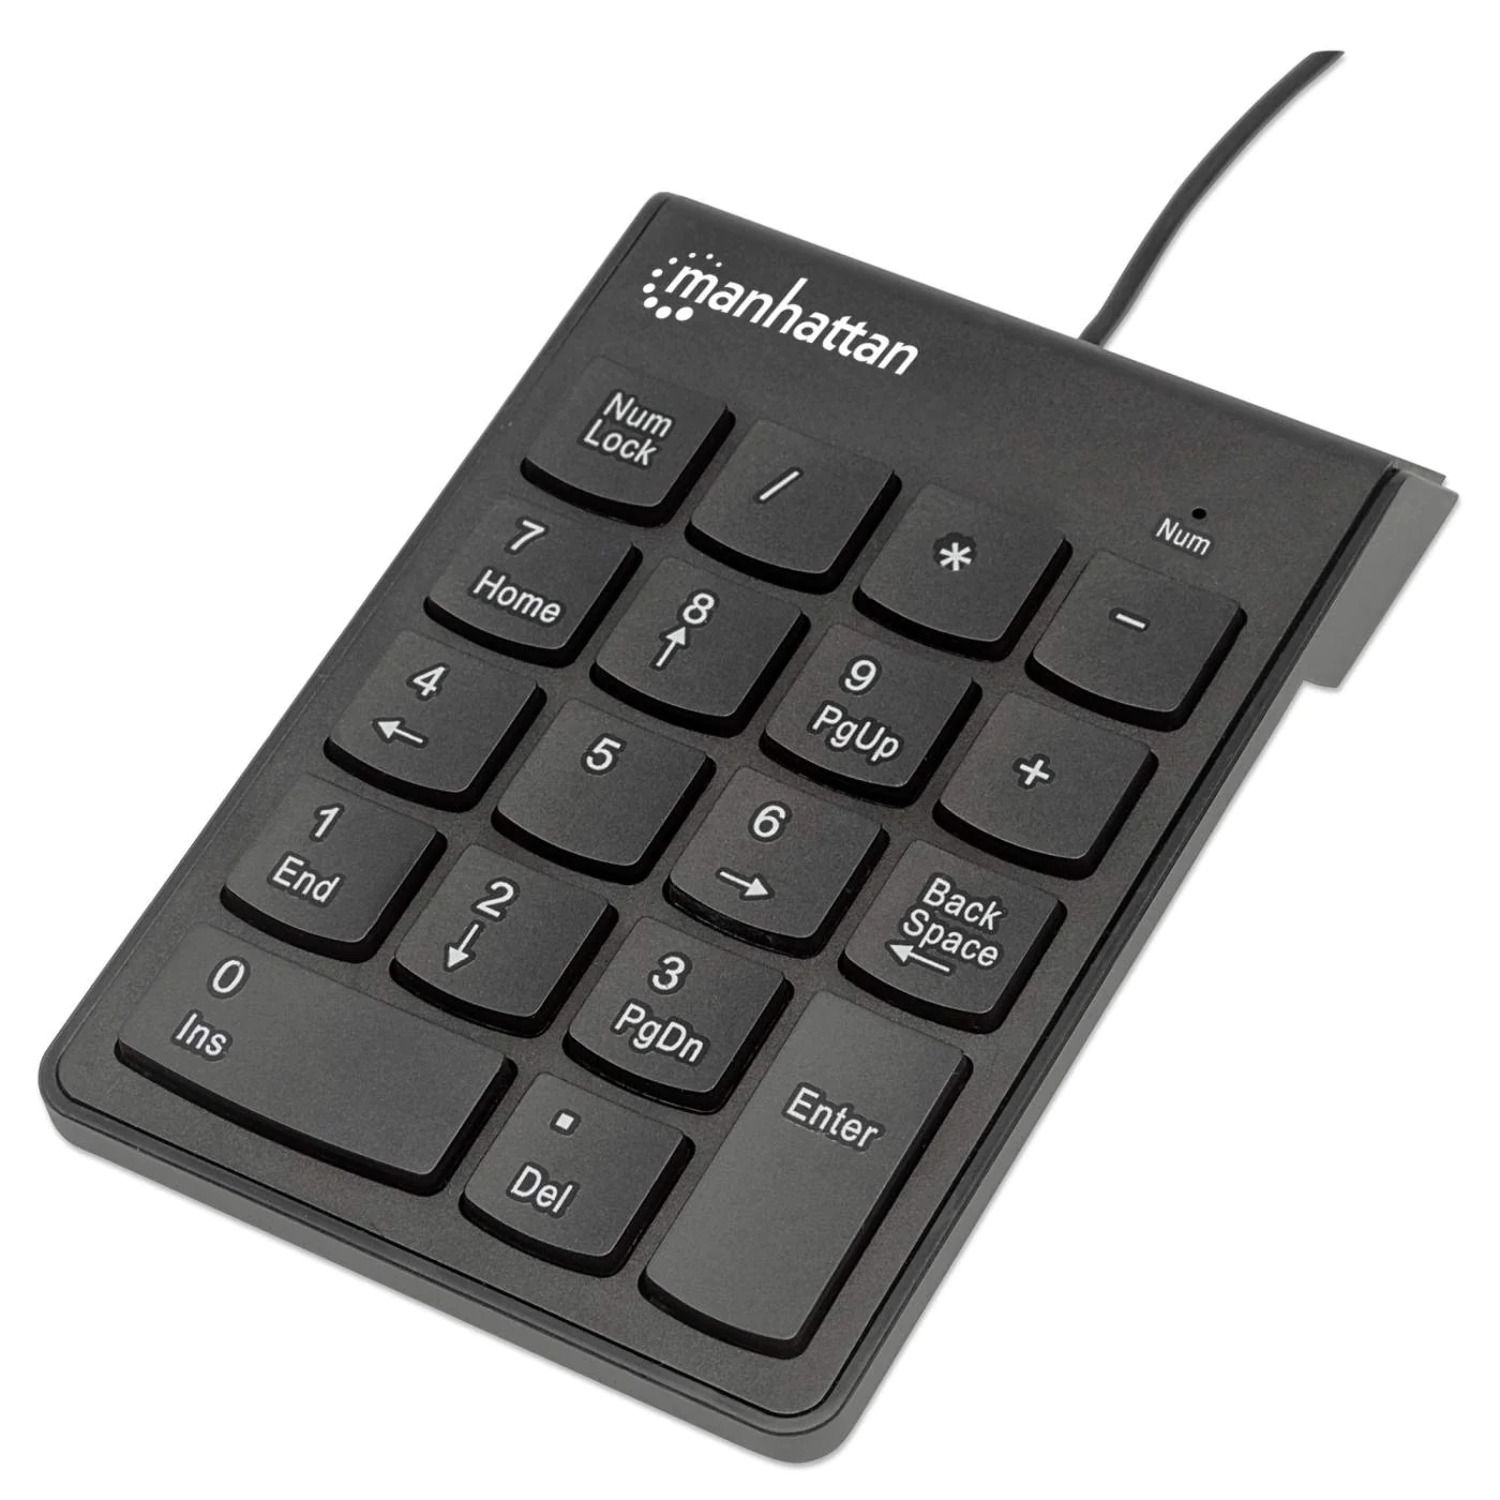 Manhattan USB Numeric Keypad with 18 Full-size keys - image 1 of 4